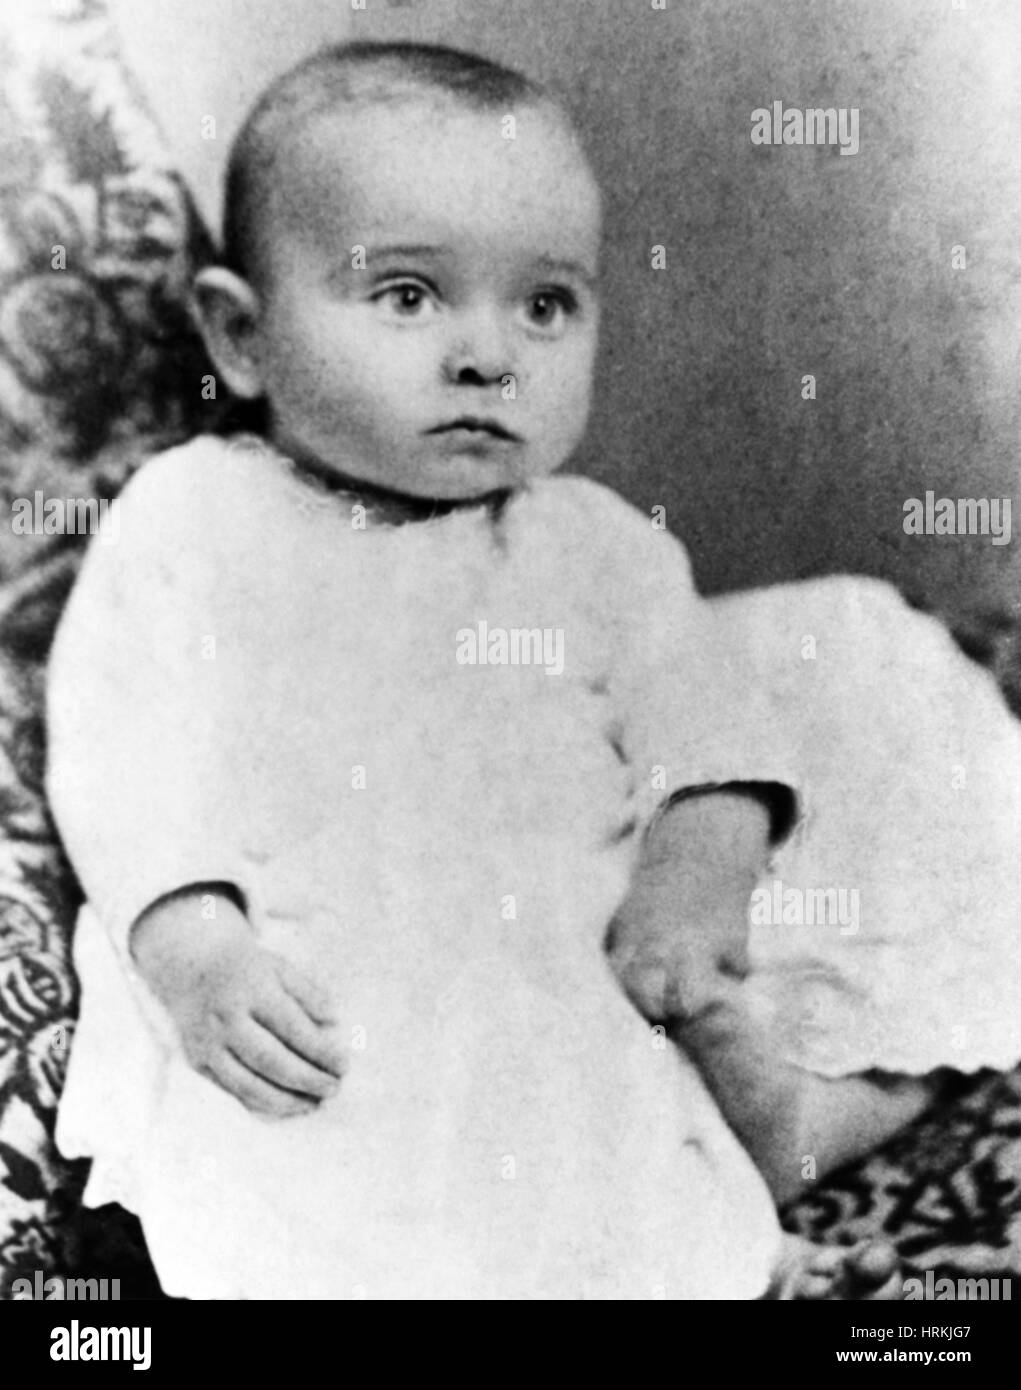 Junge Truman, 1884 Stockfoto